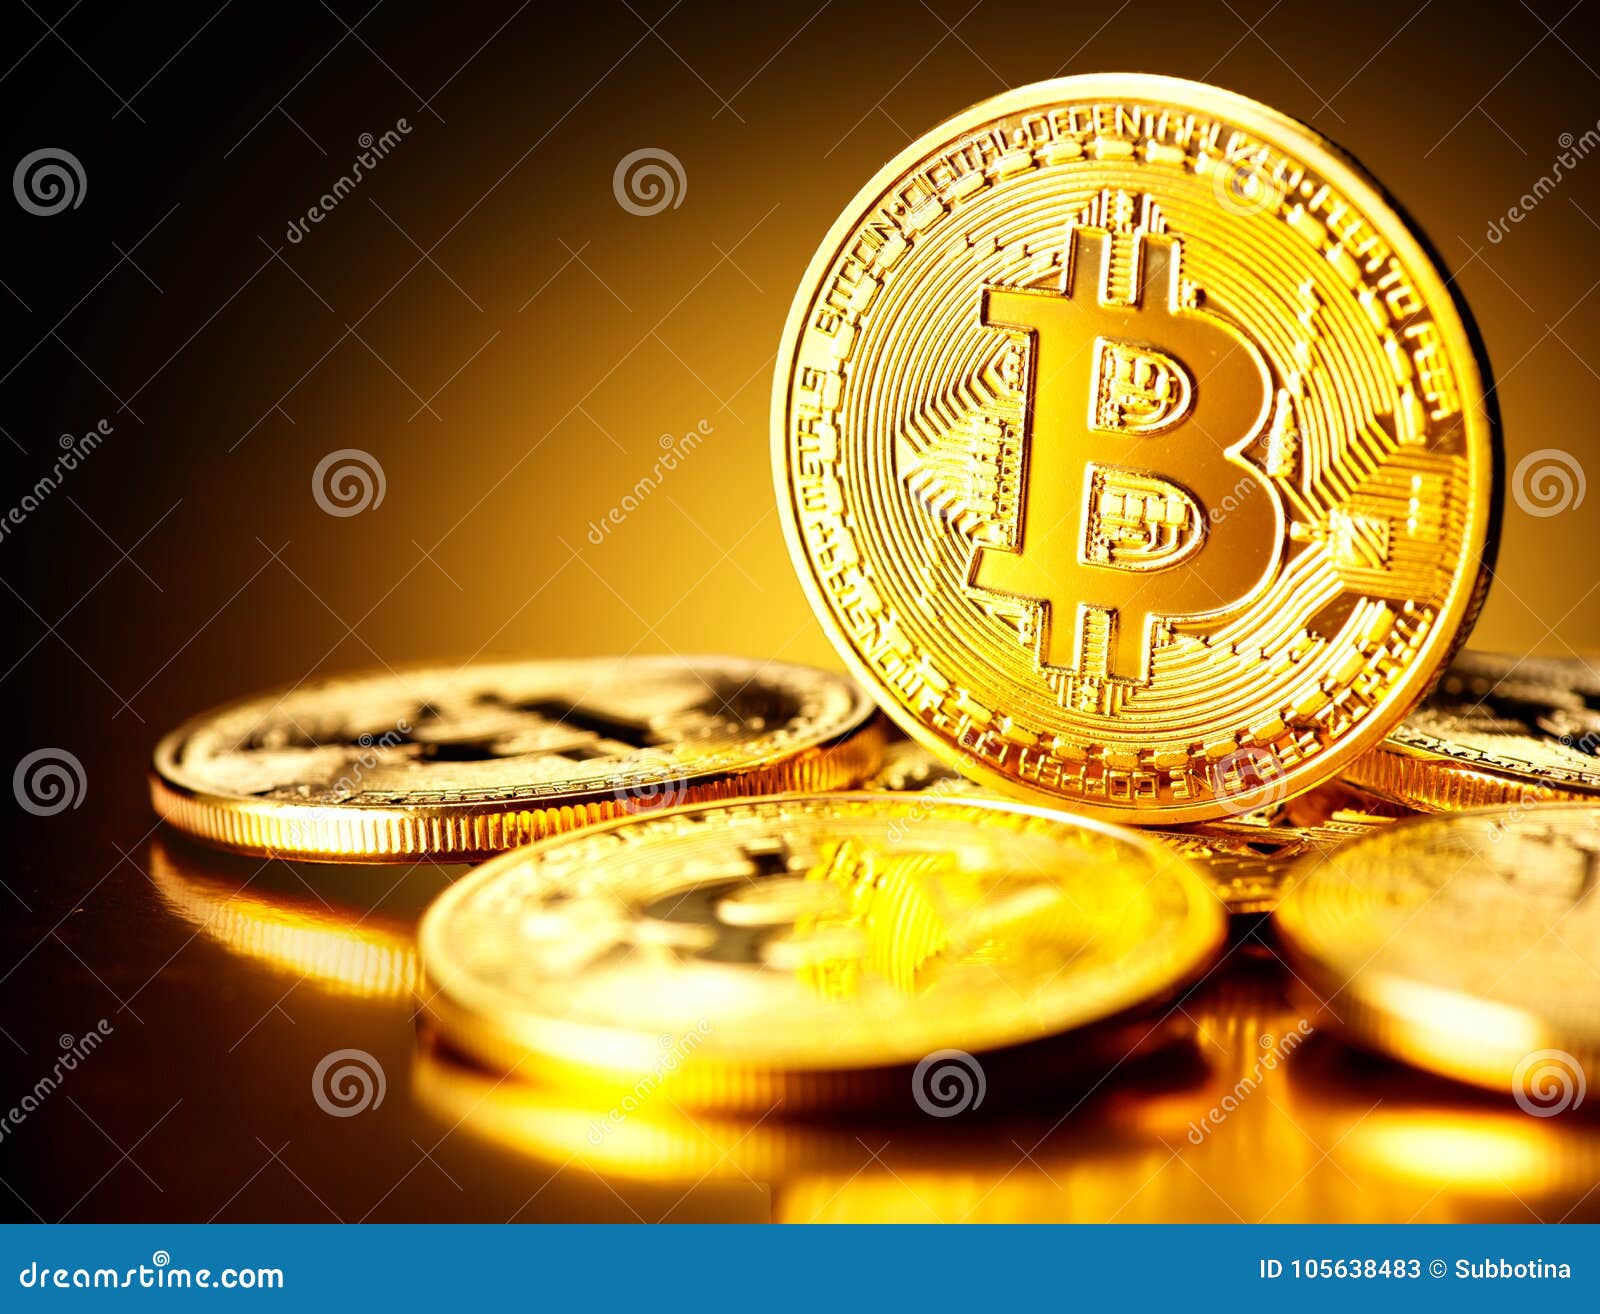 valeur bitcoin dollar canadien